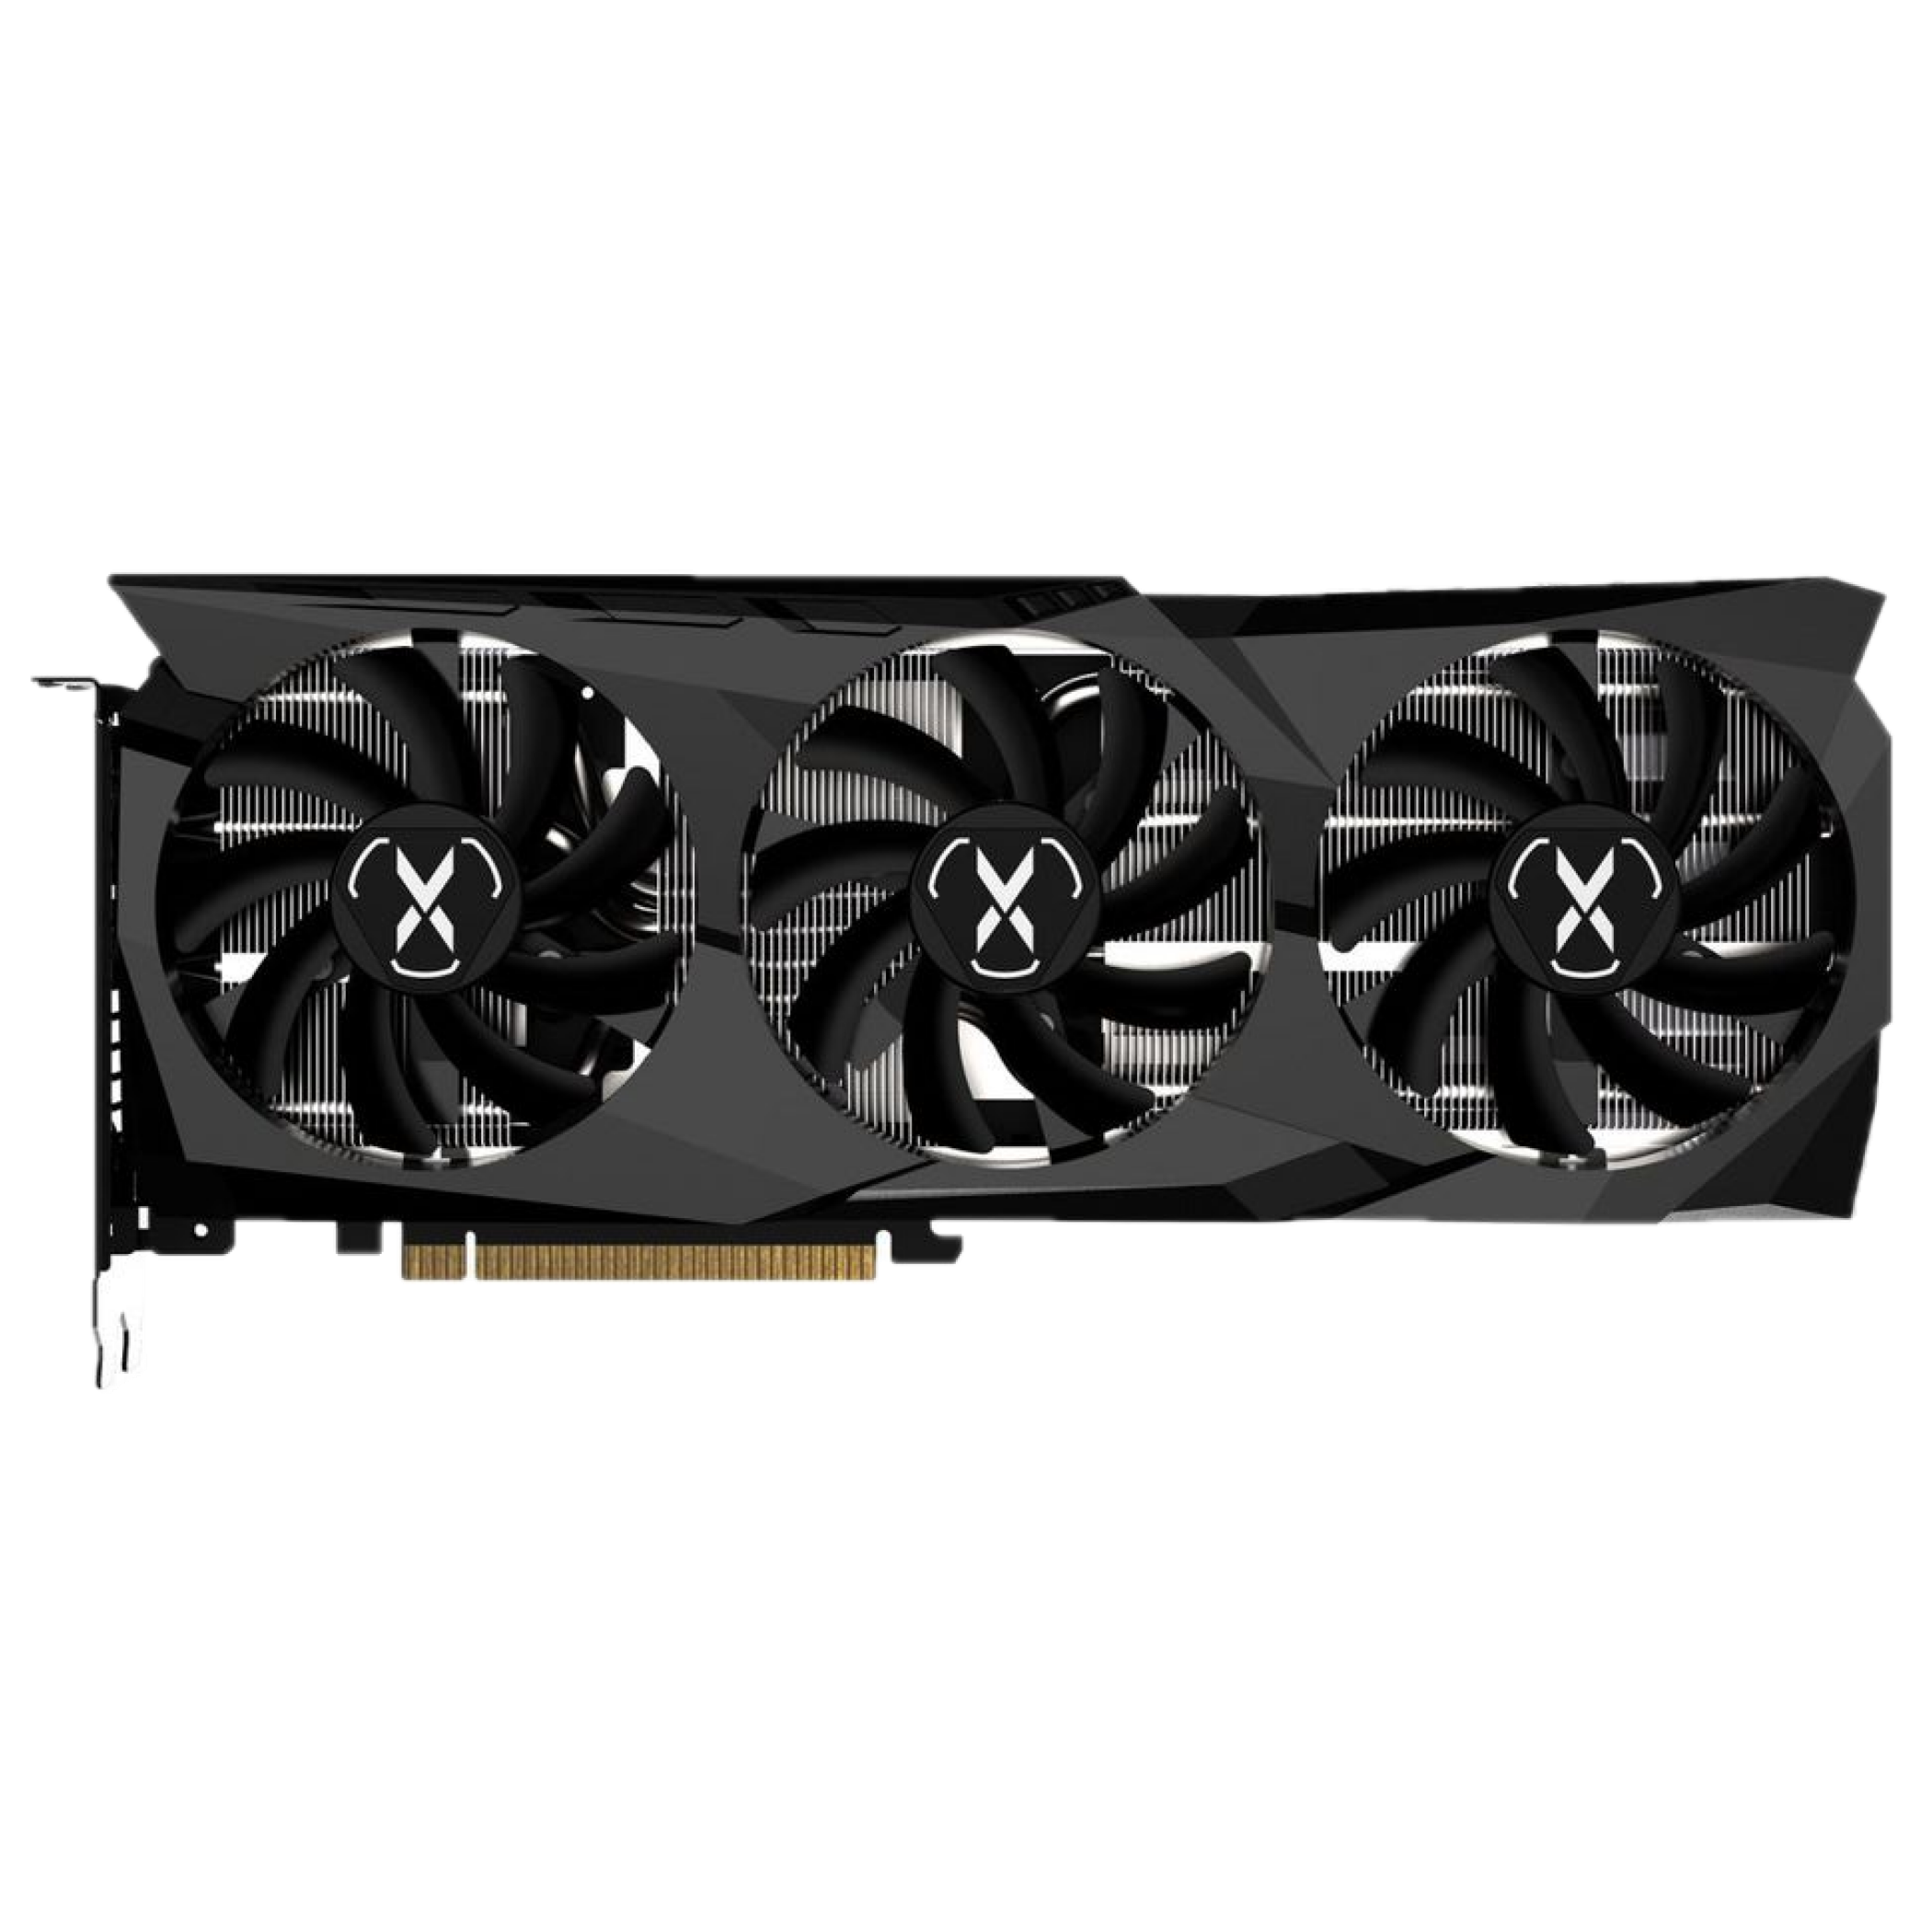 The AMD Radeon RX 6700 GPU.